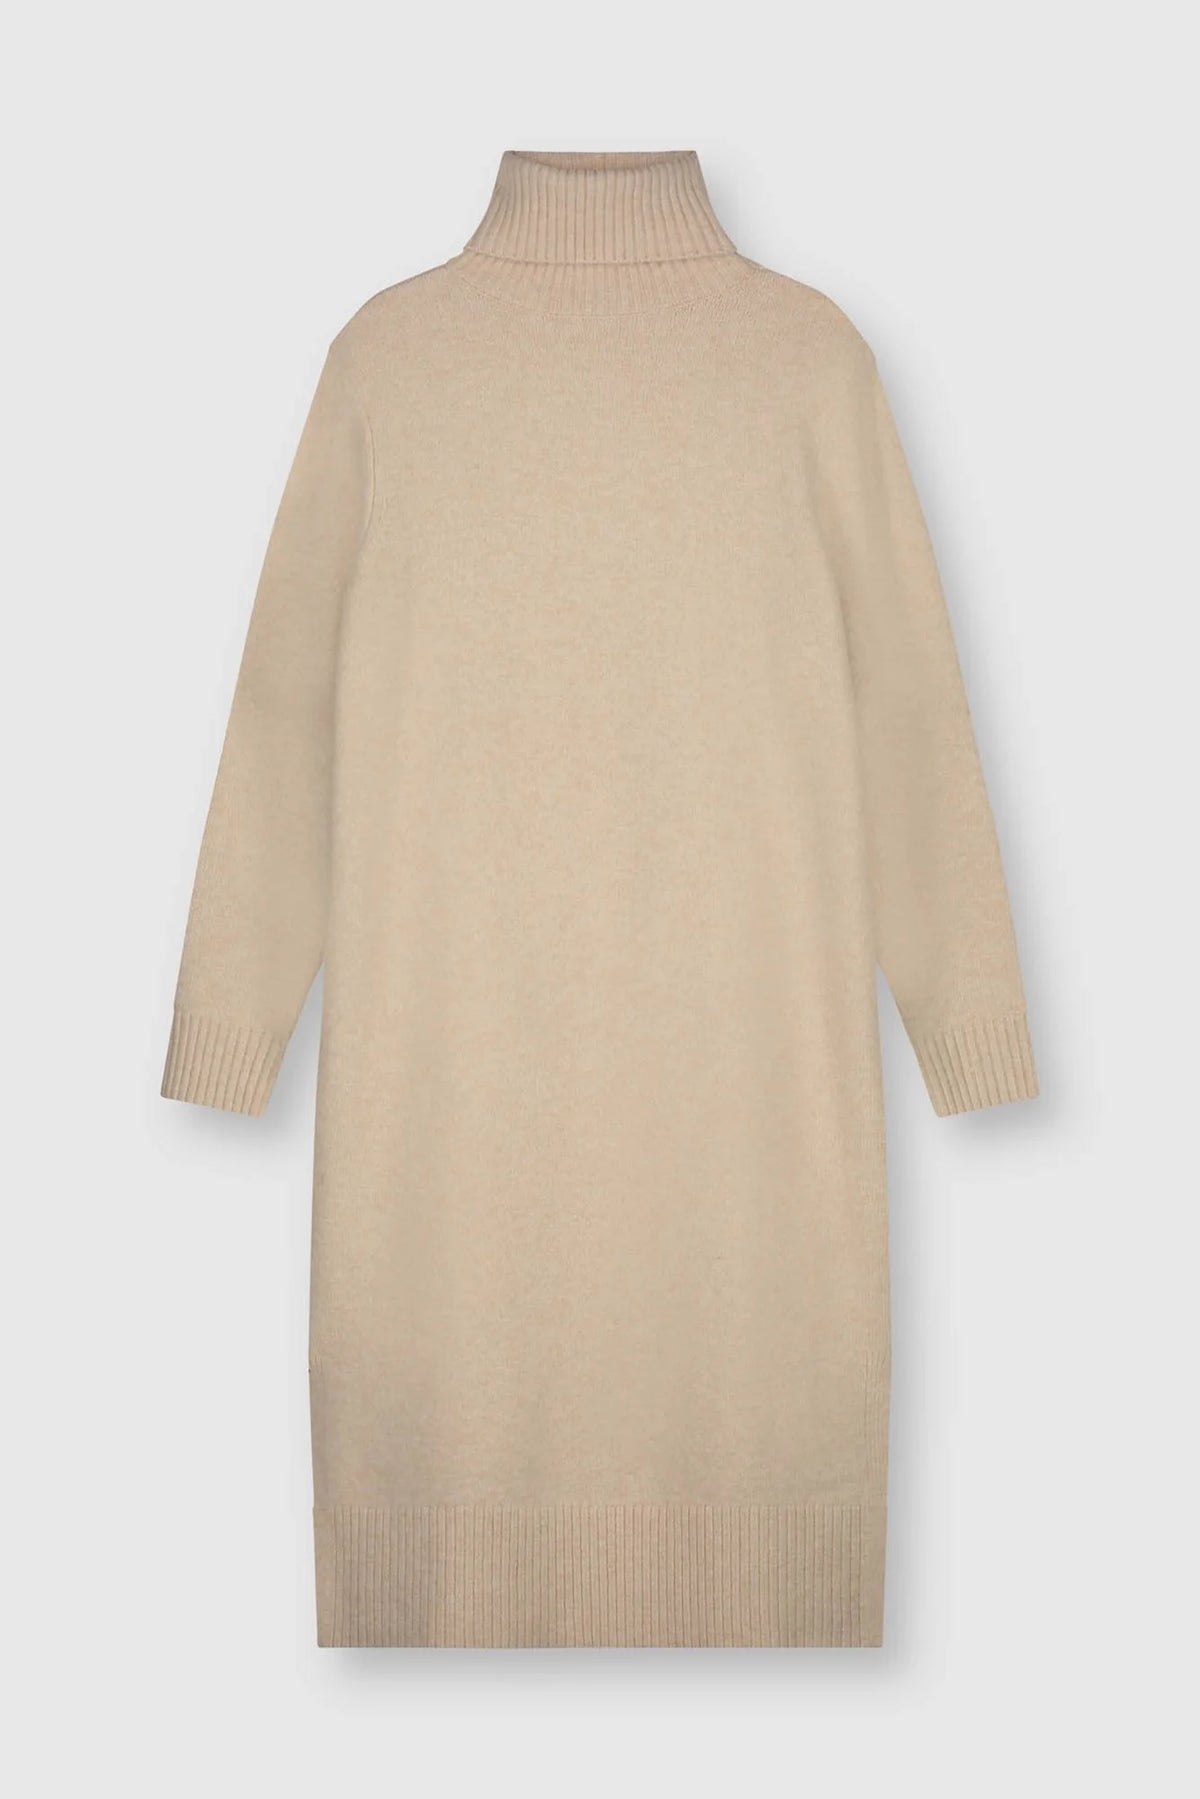 Ecru straight knitted long sleeved roll neck jumper dress